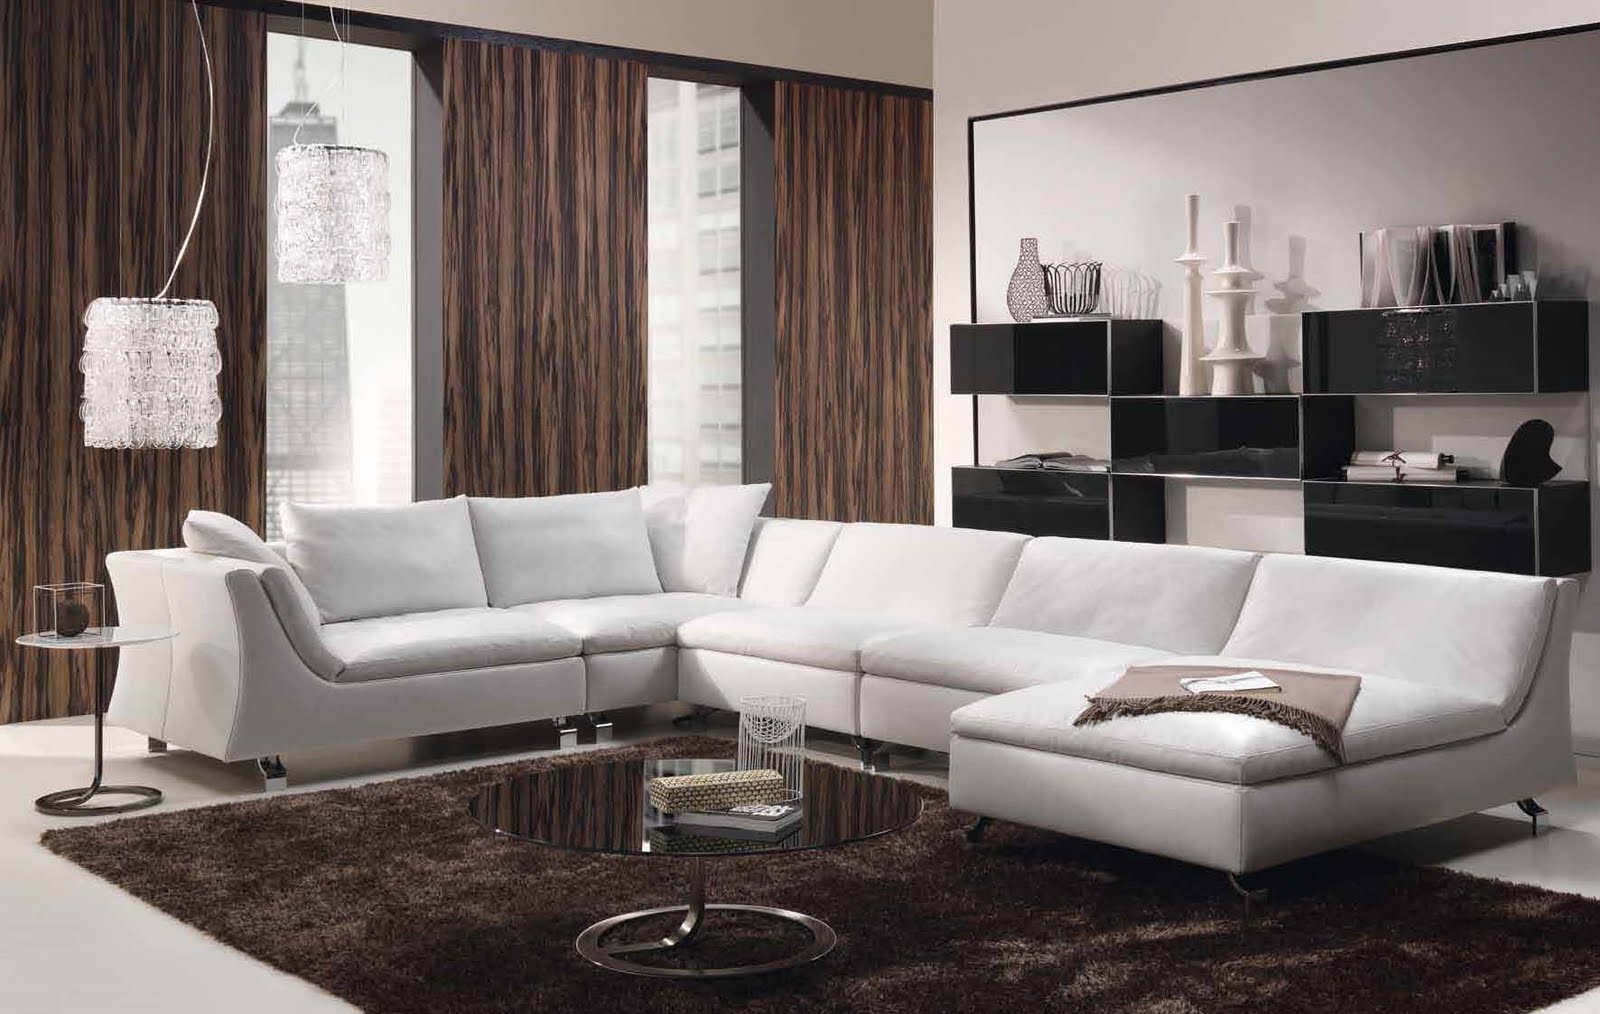 Future House Design: Modern Living Room Interior Design Styles ...